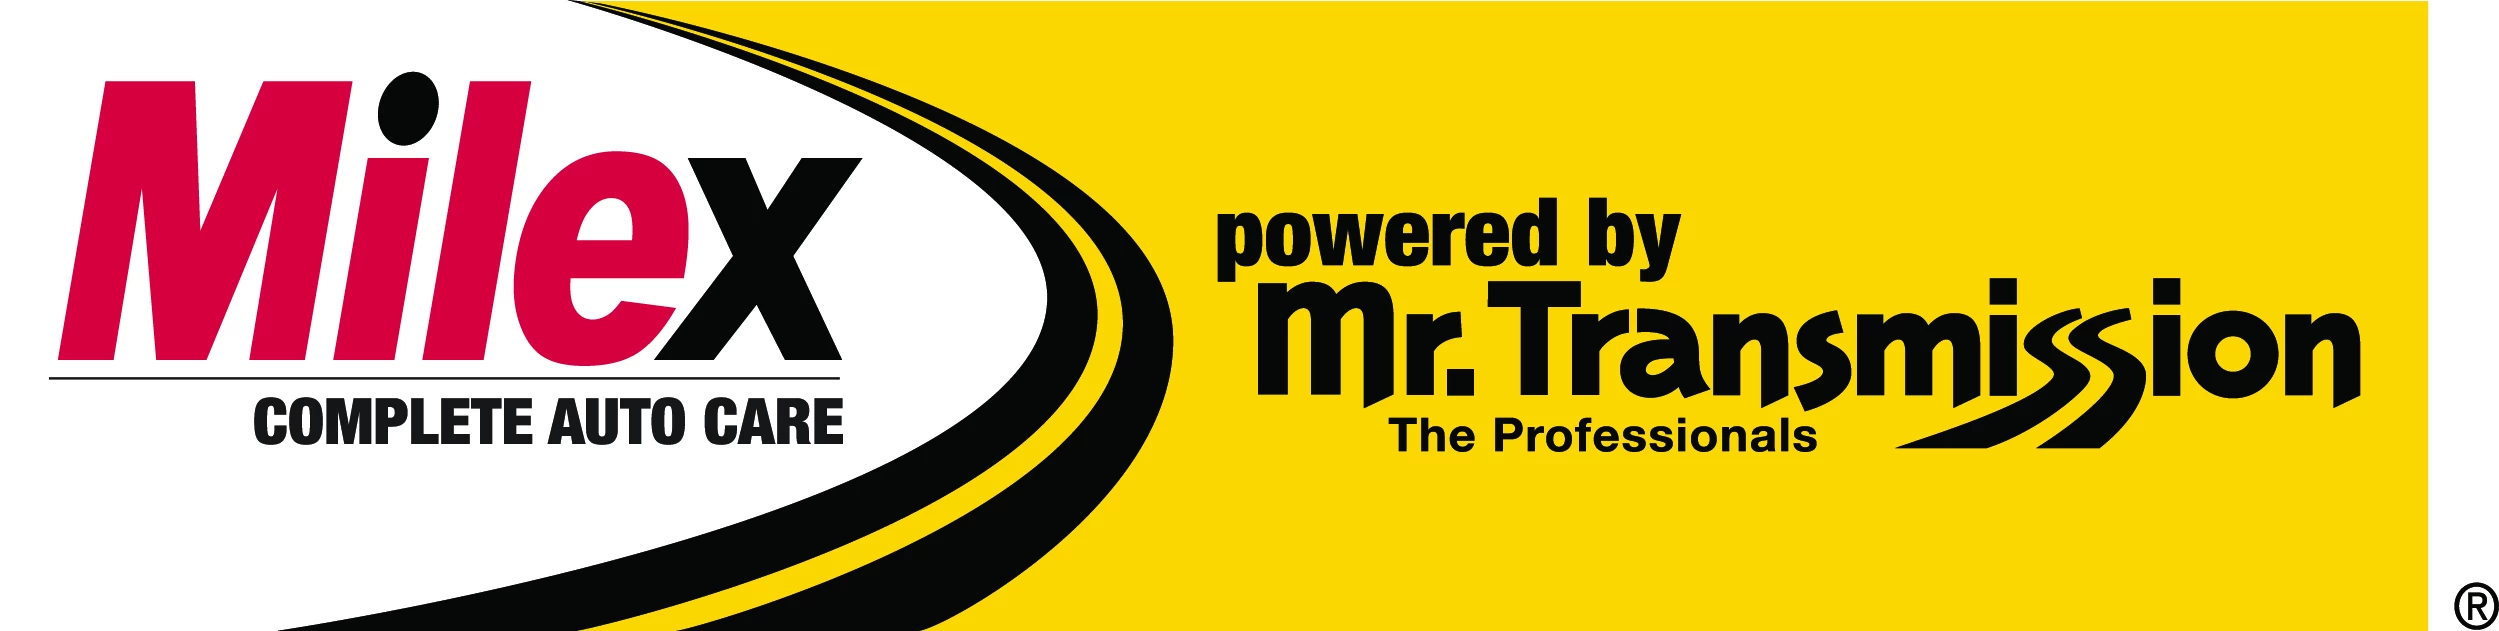 Mr. Transmission | Milex Complete Auto Care Franchise Logo